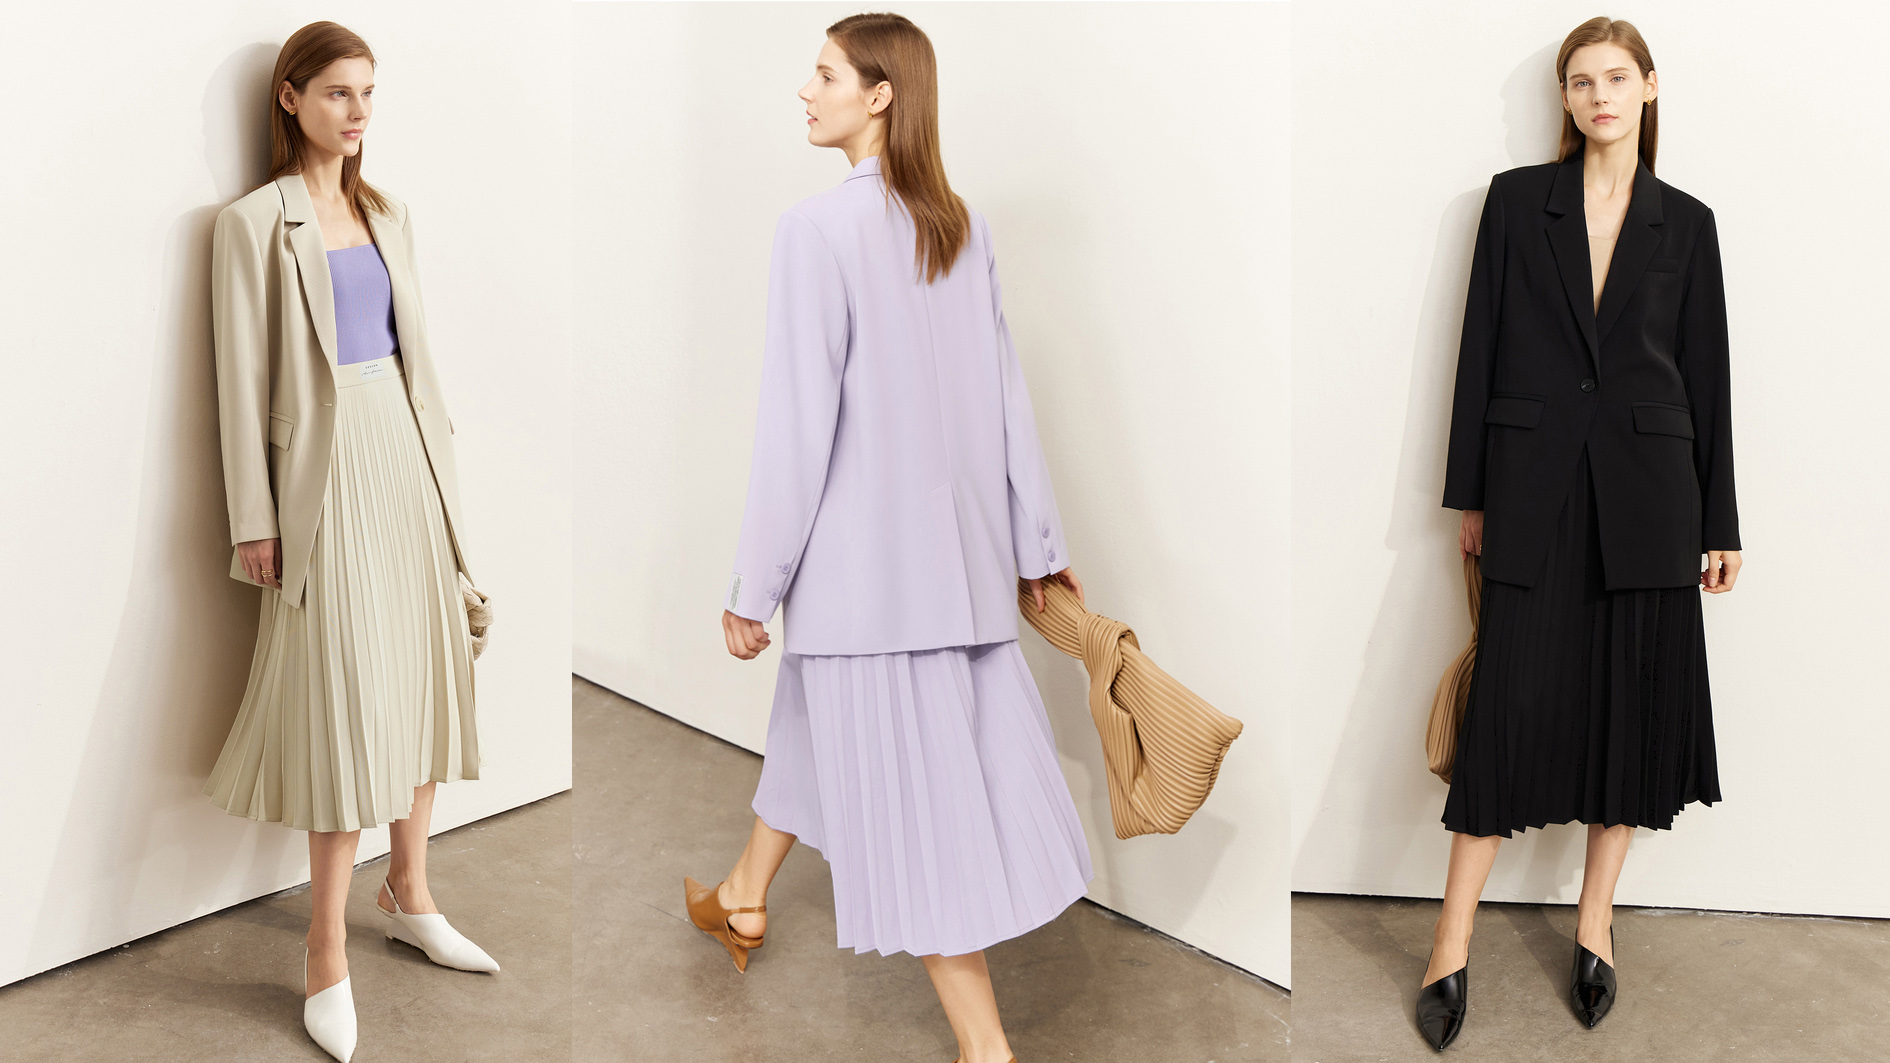 Blazer Pleated A-Line Skirt Fashion Suit Women's Two-Piece Products |Auschalink